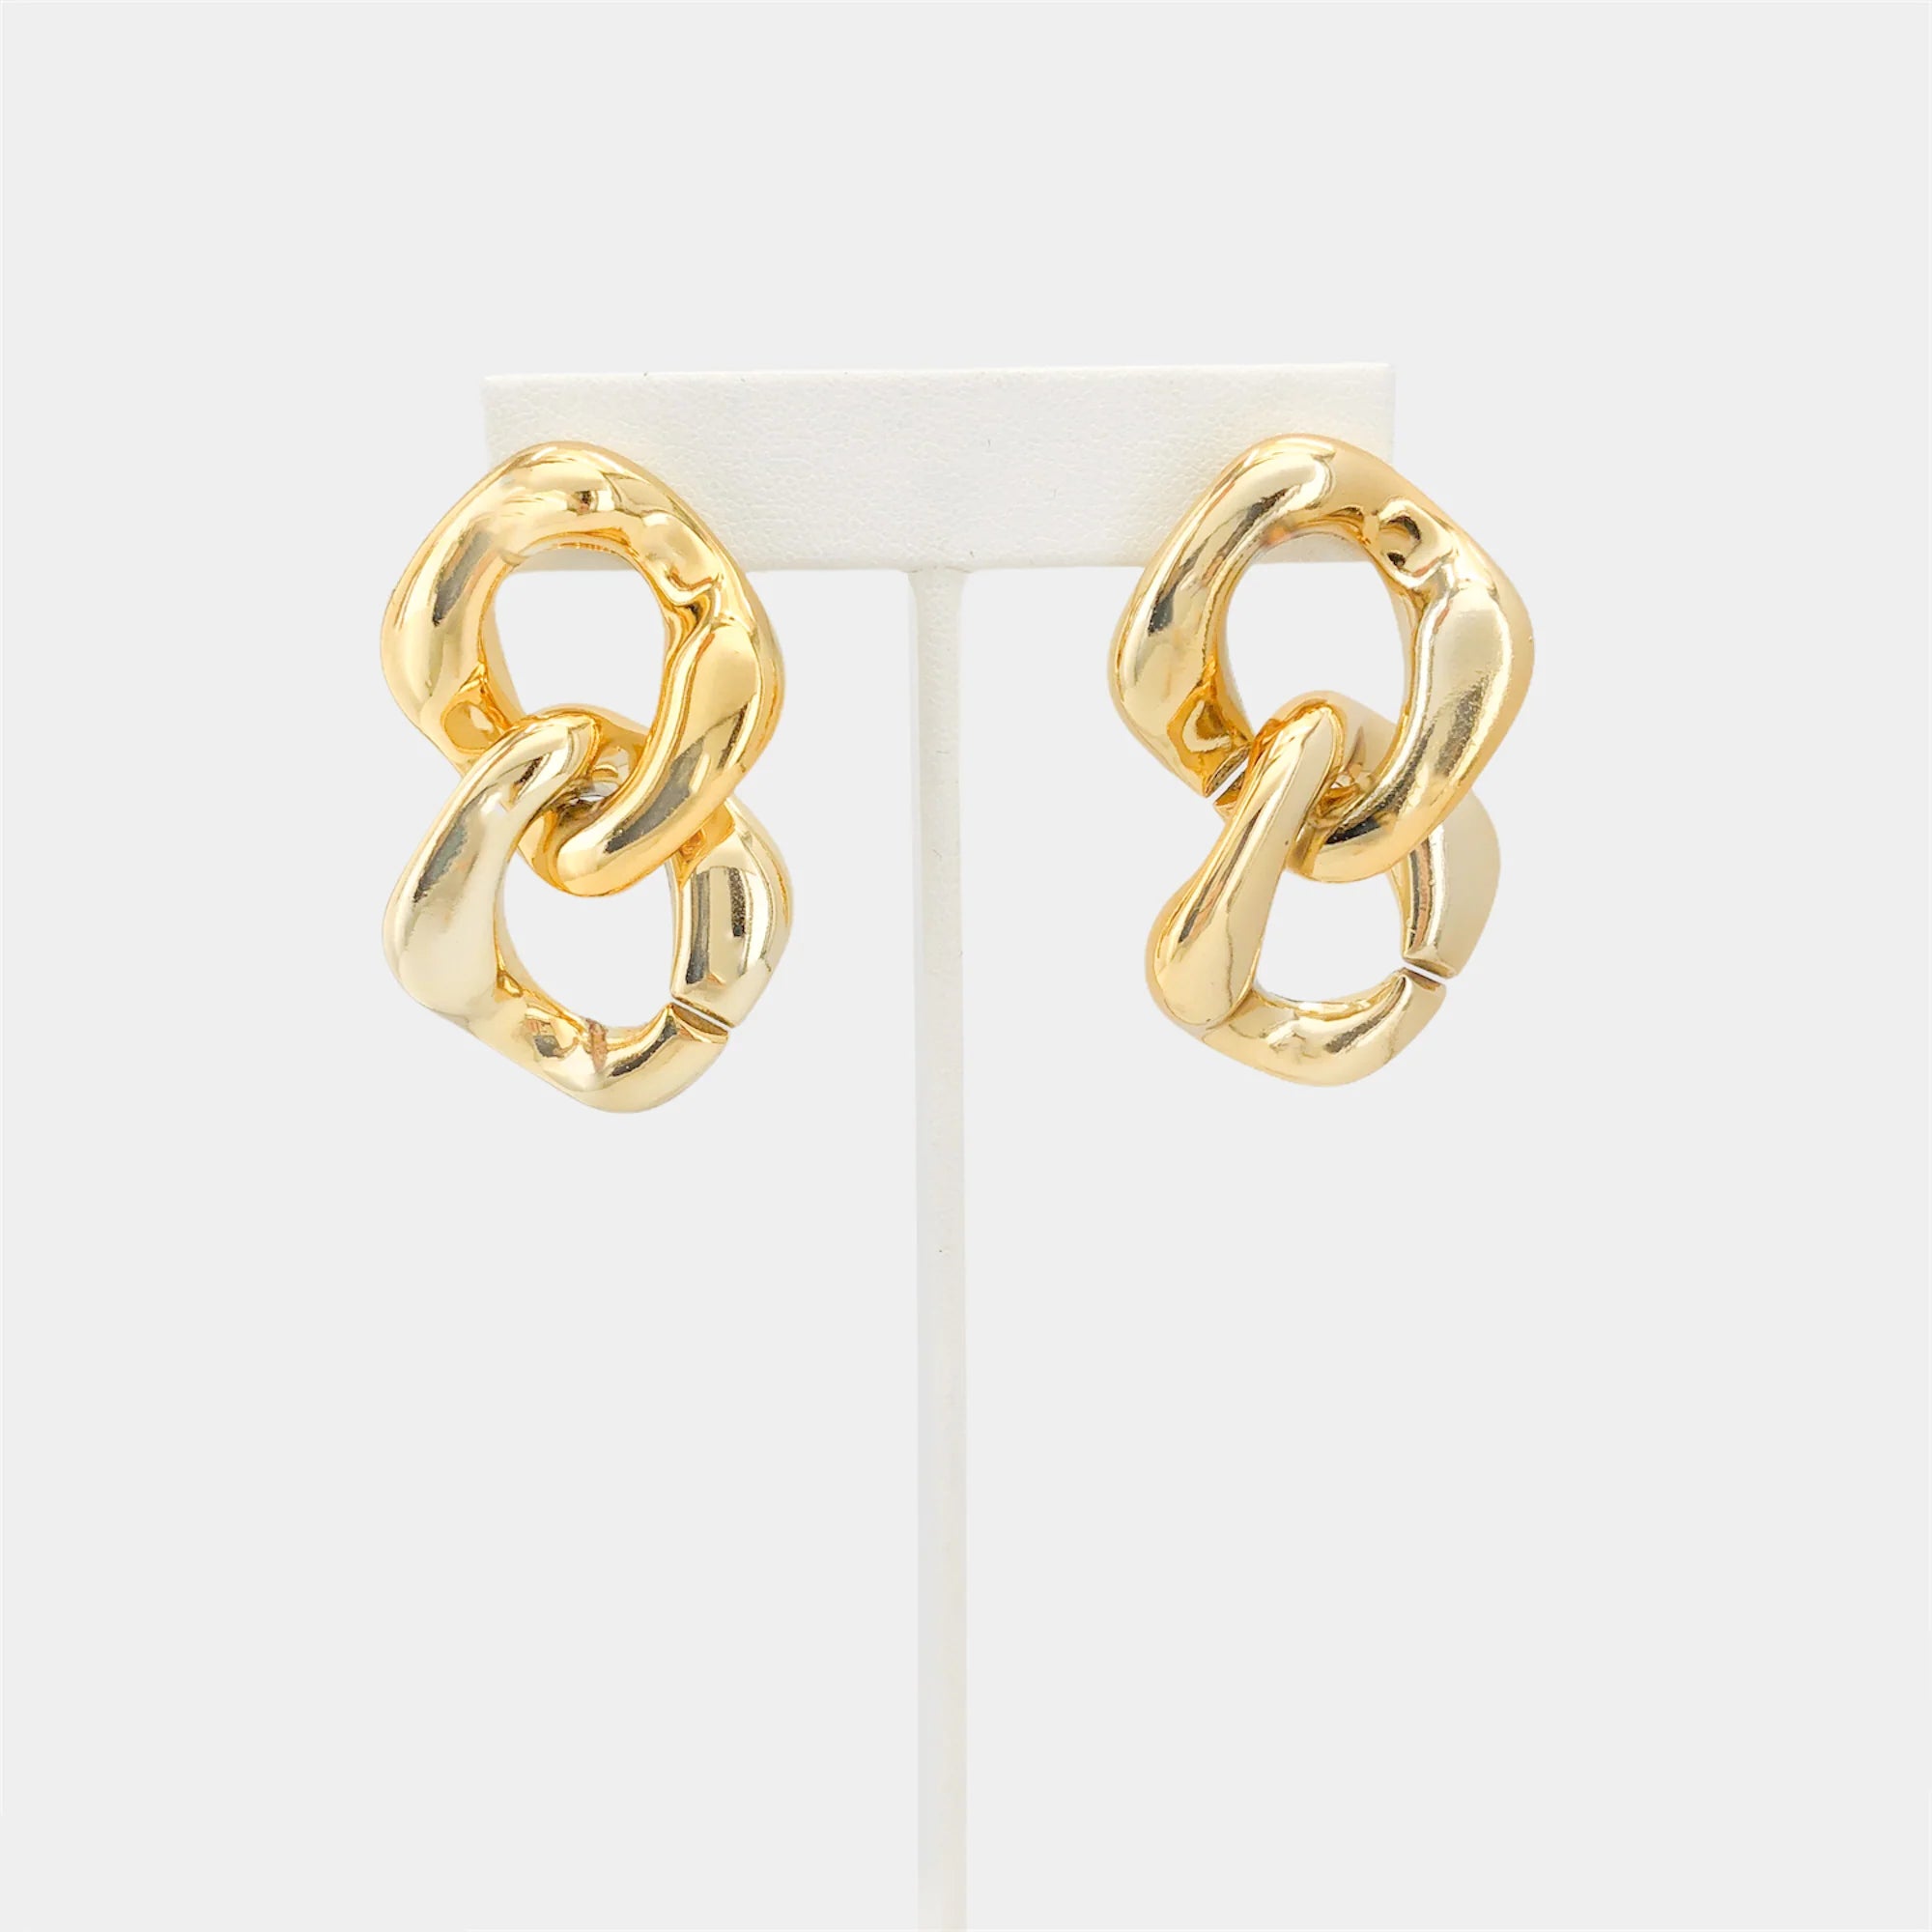 YER001 - Large Link Earrings